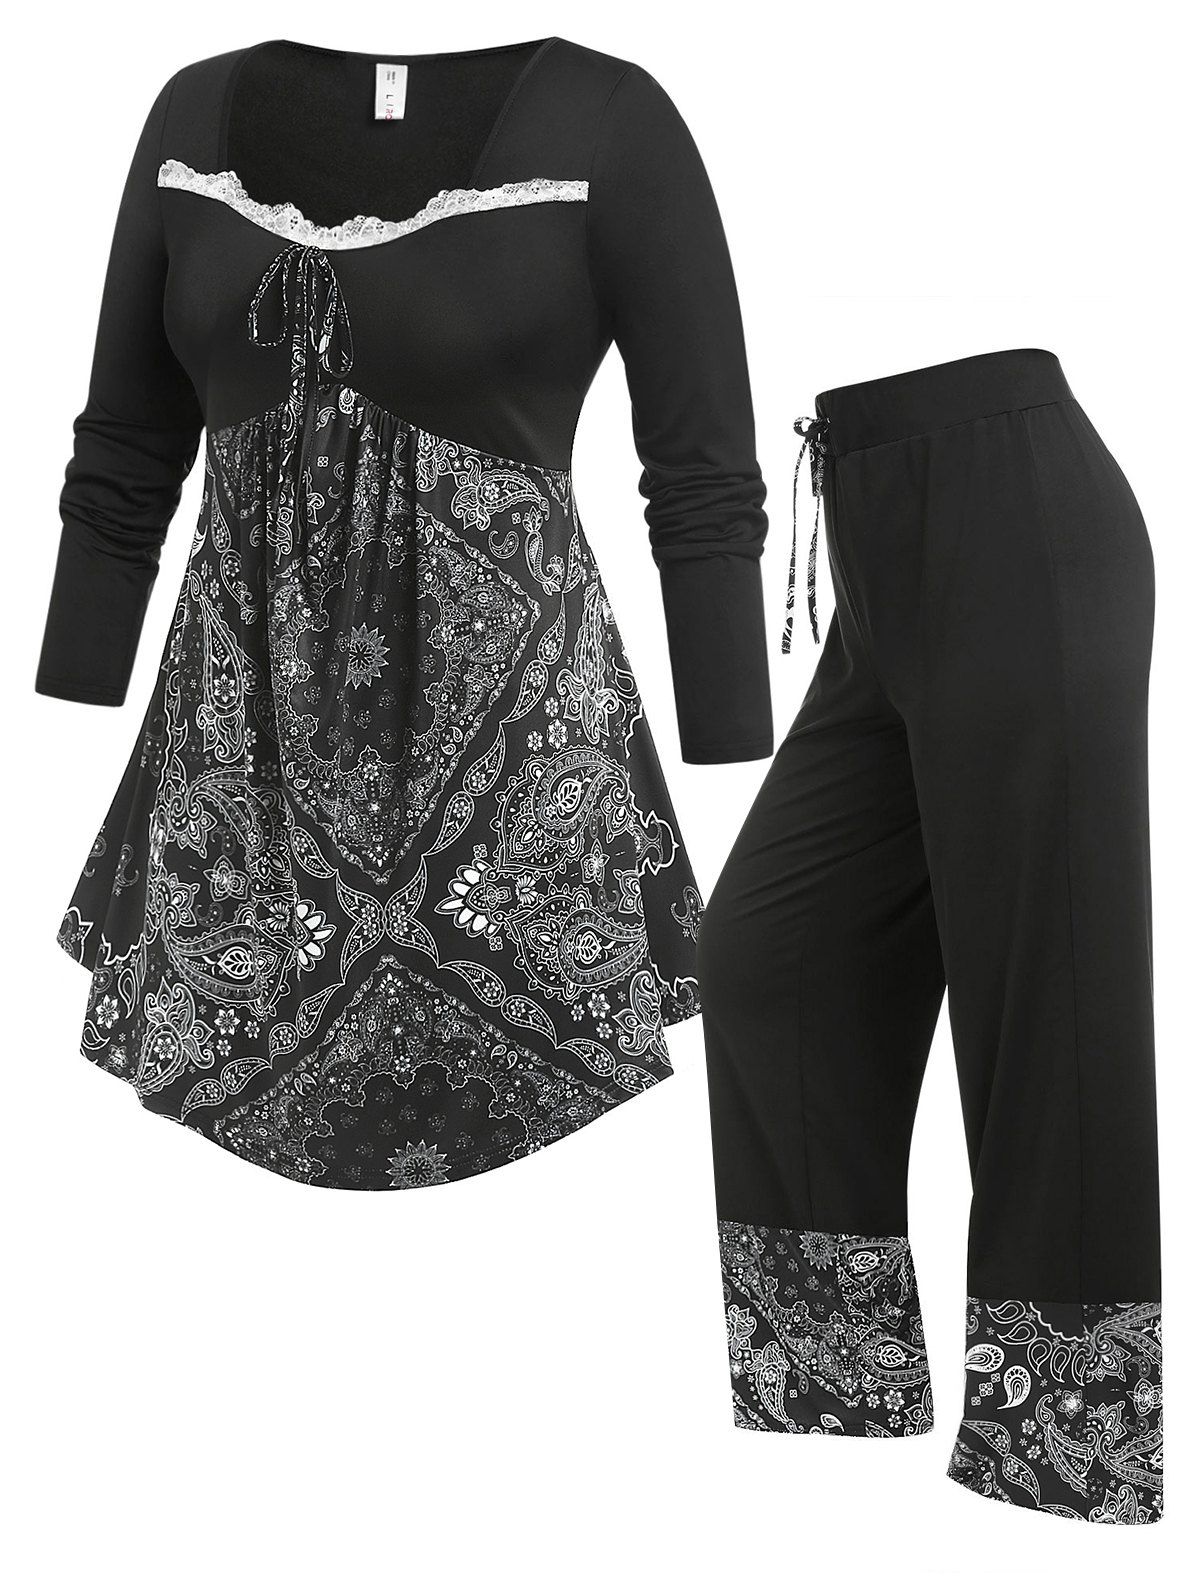 Plus Size Paisley Tribal Print T-shirt and Drawstring Pants Set - BLACK 4X